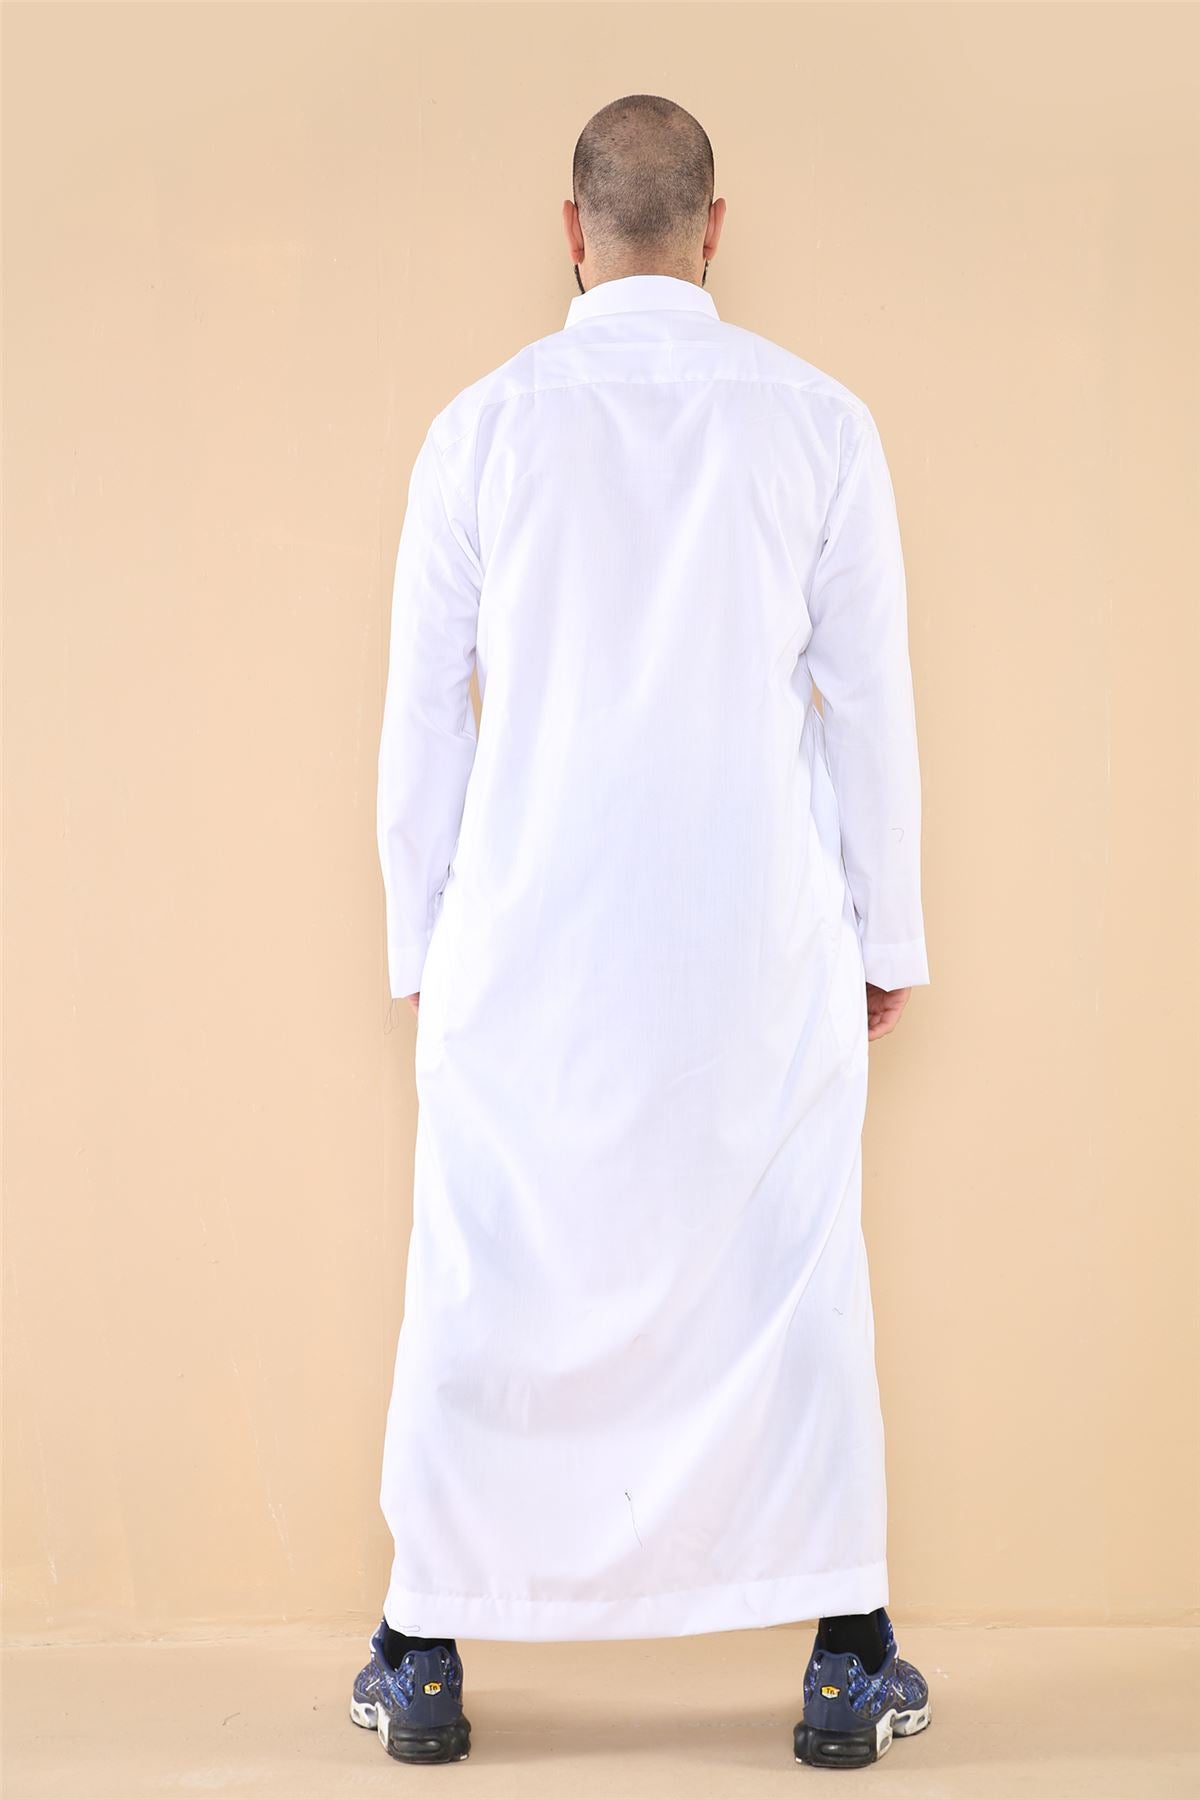 Dishdasha pour homme robe islamique musulmane arabe avec col remontable style kaftan thobe en coton